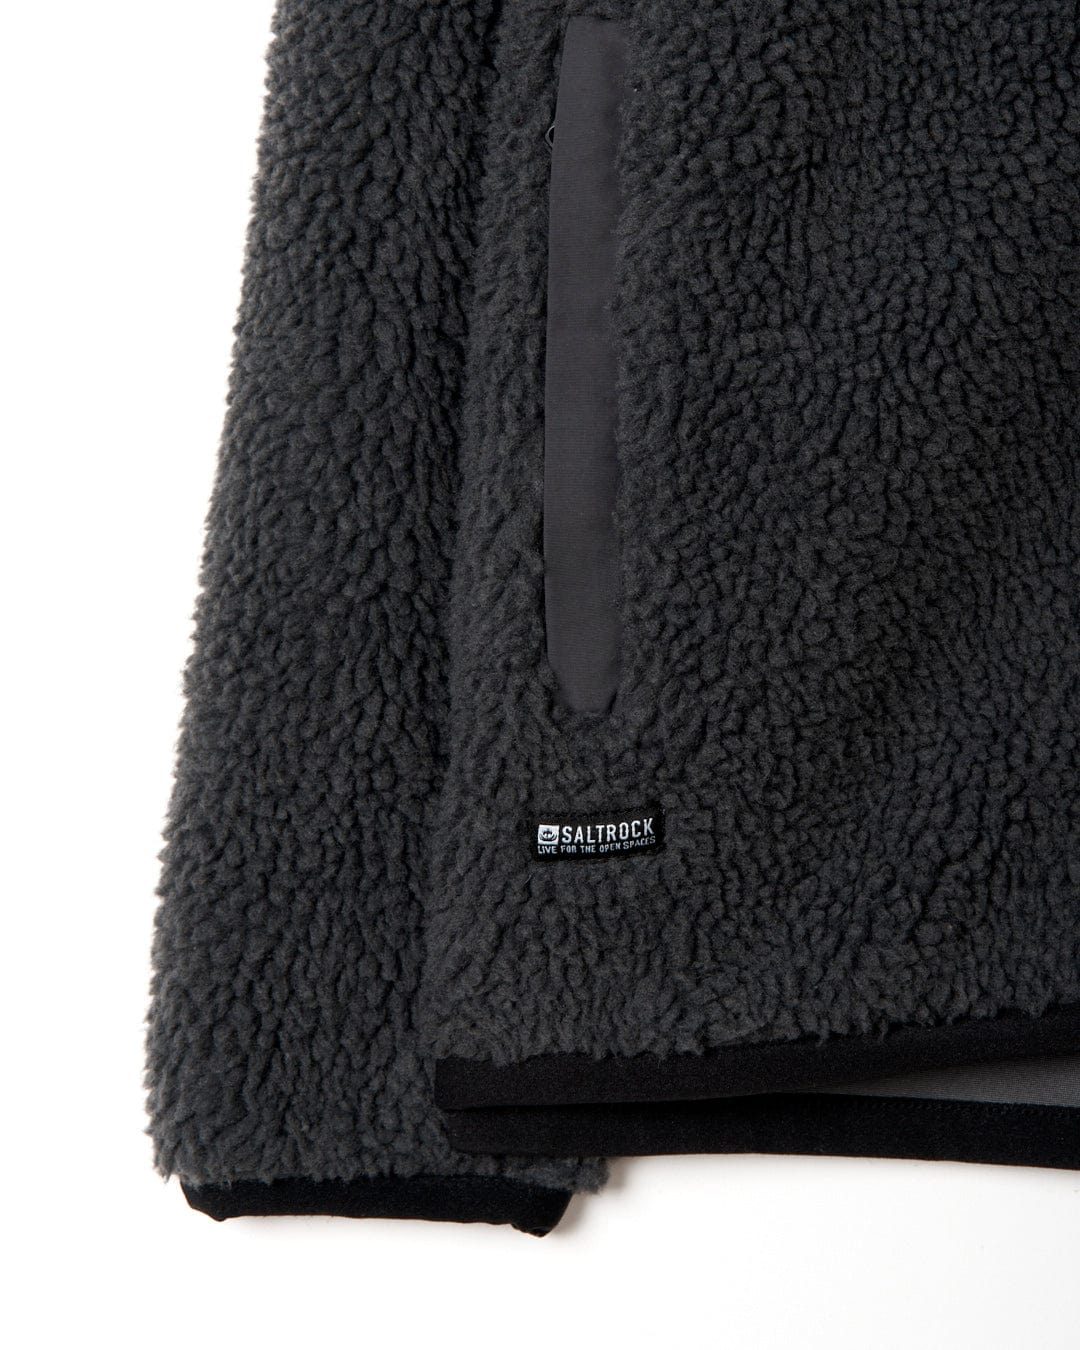 A close up of a black Wye - Mens Zip Sherpa Fleece - Dark Grey jacket with Saltrock branding.